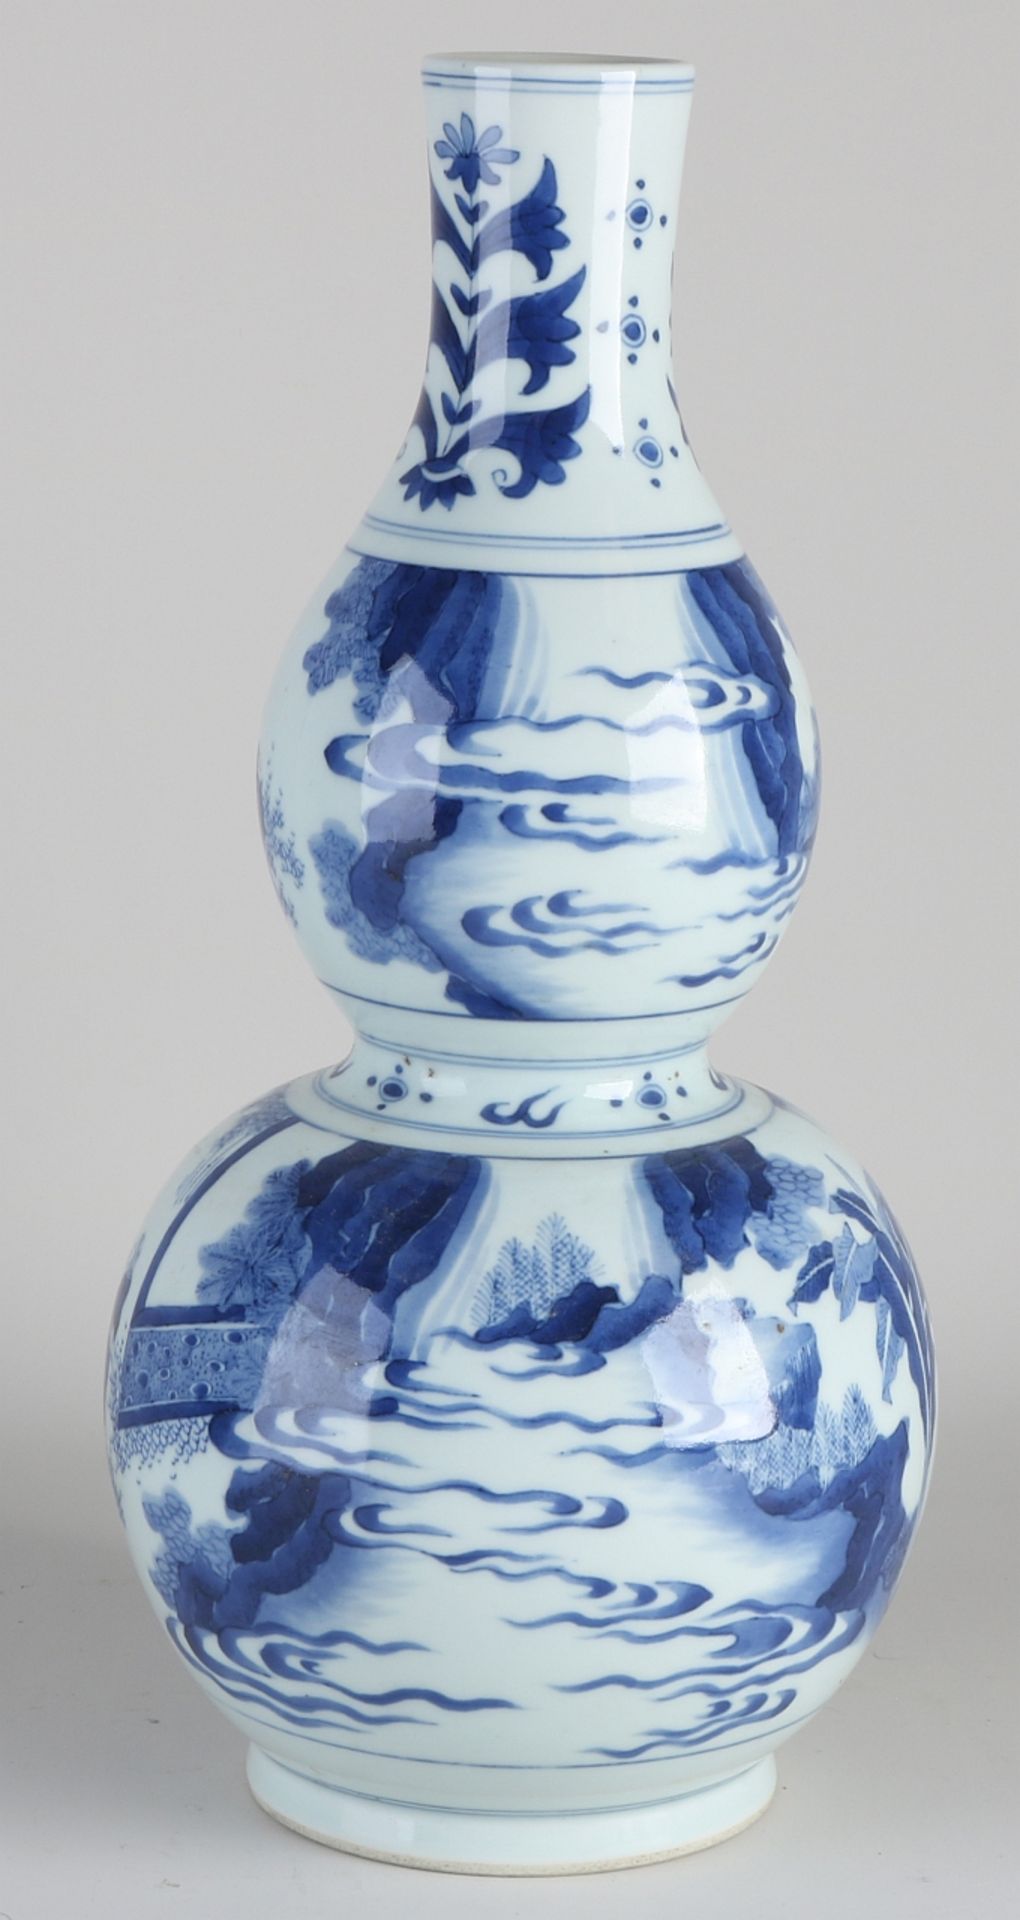 Chinese knobby vase H 39.8 cm. - Image 2 of 3